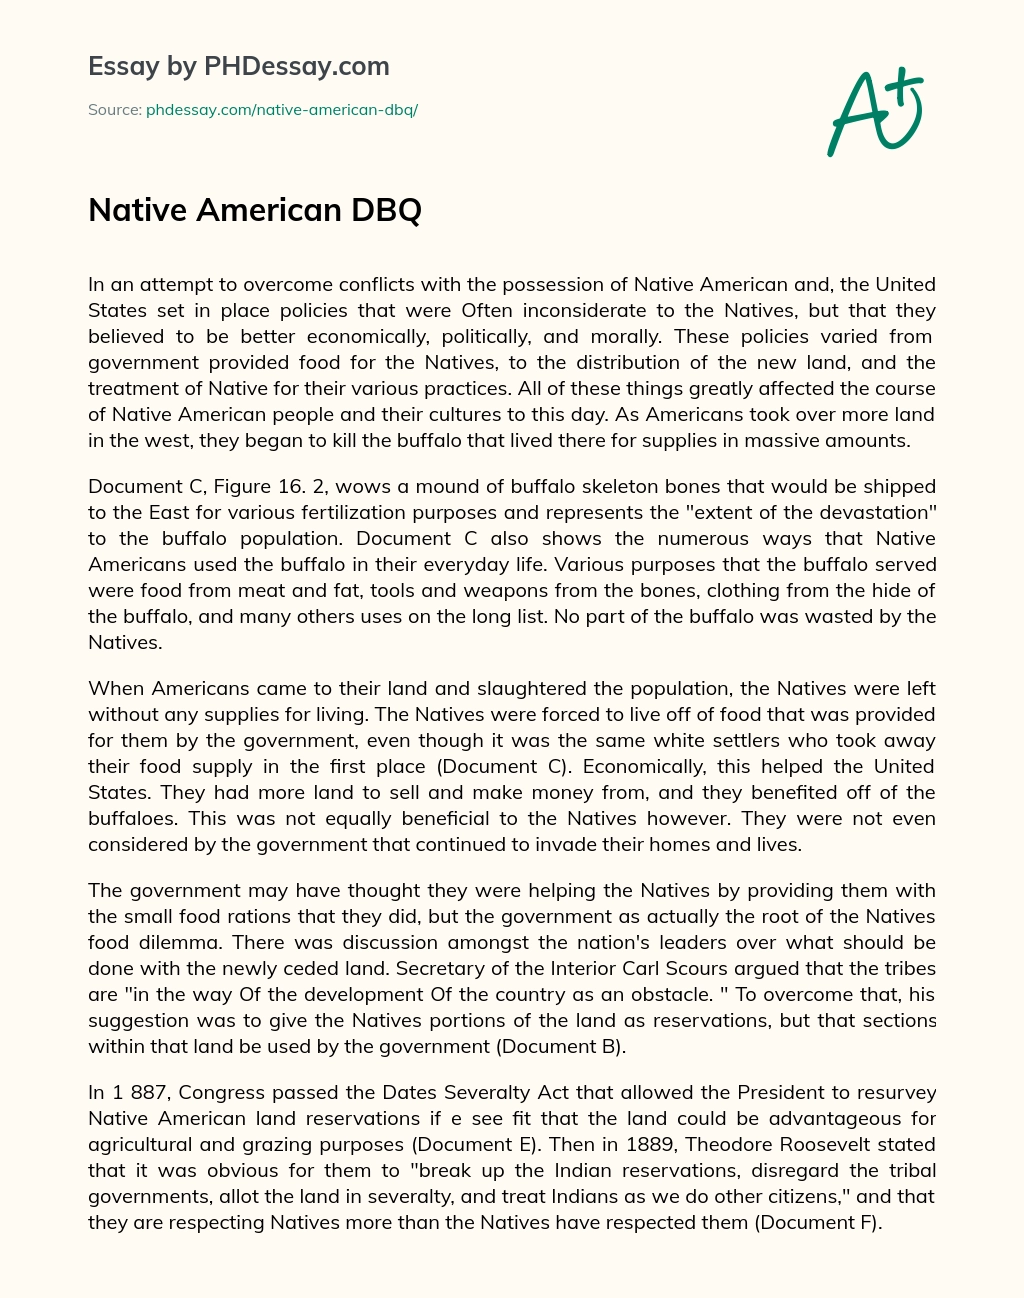 Native American DBQ essay